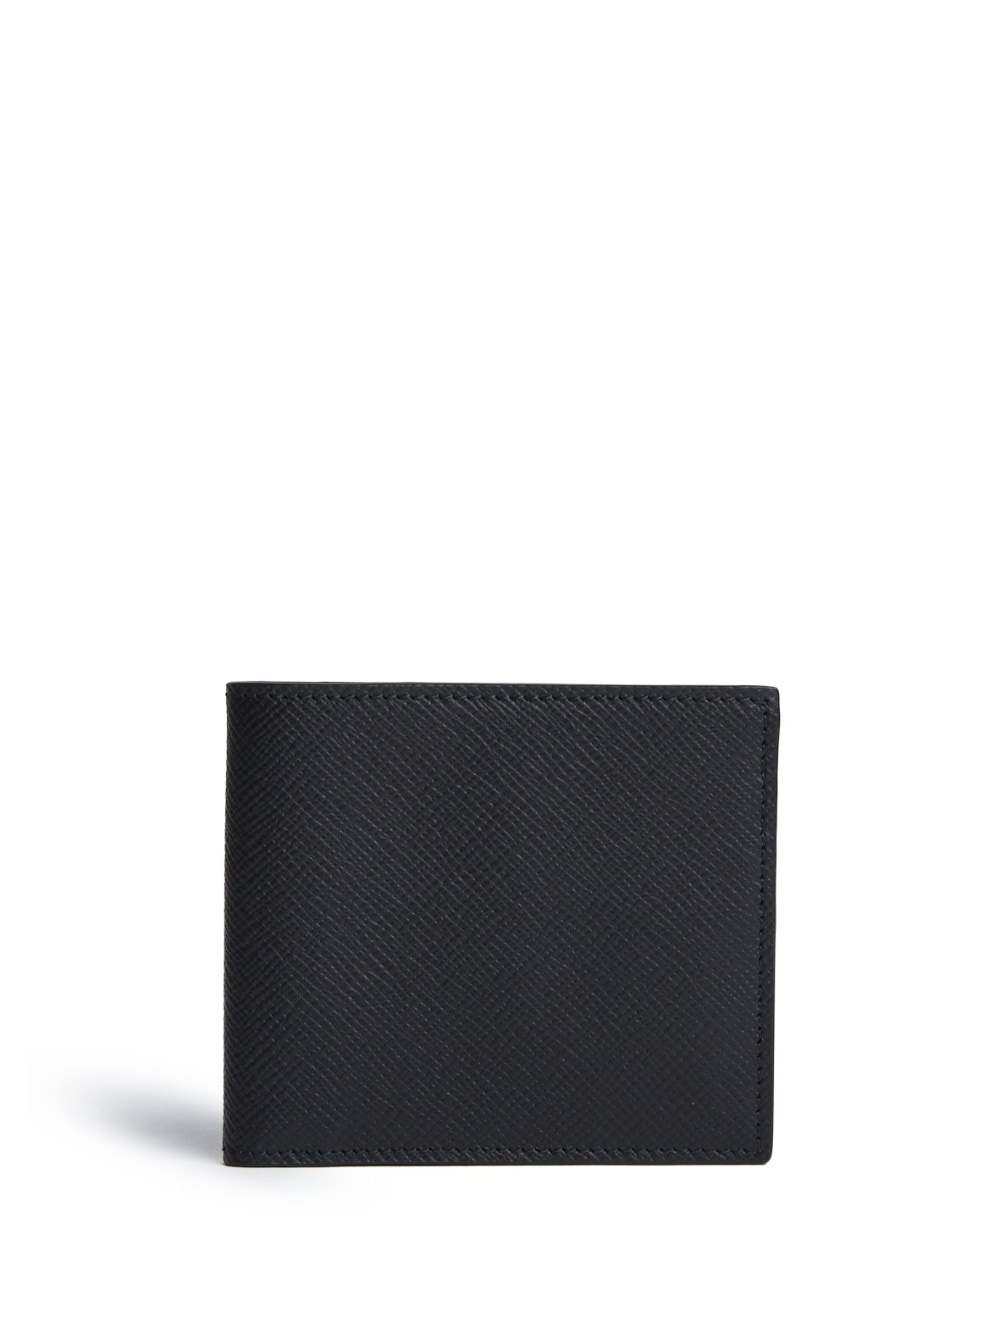 Panama bi-fold leather wallet - 2